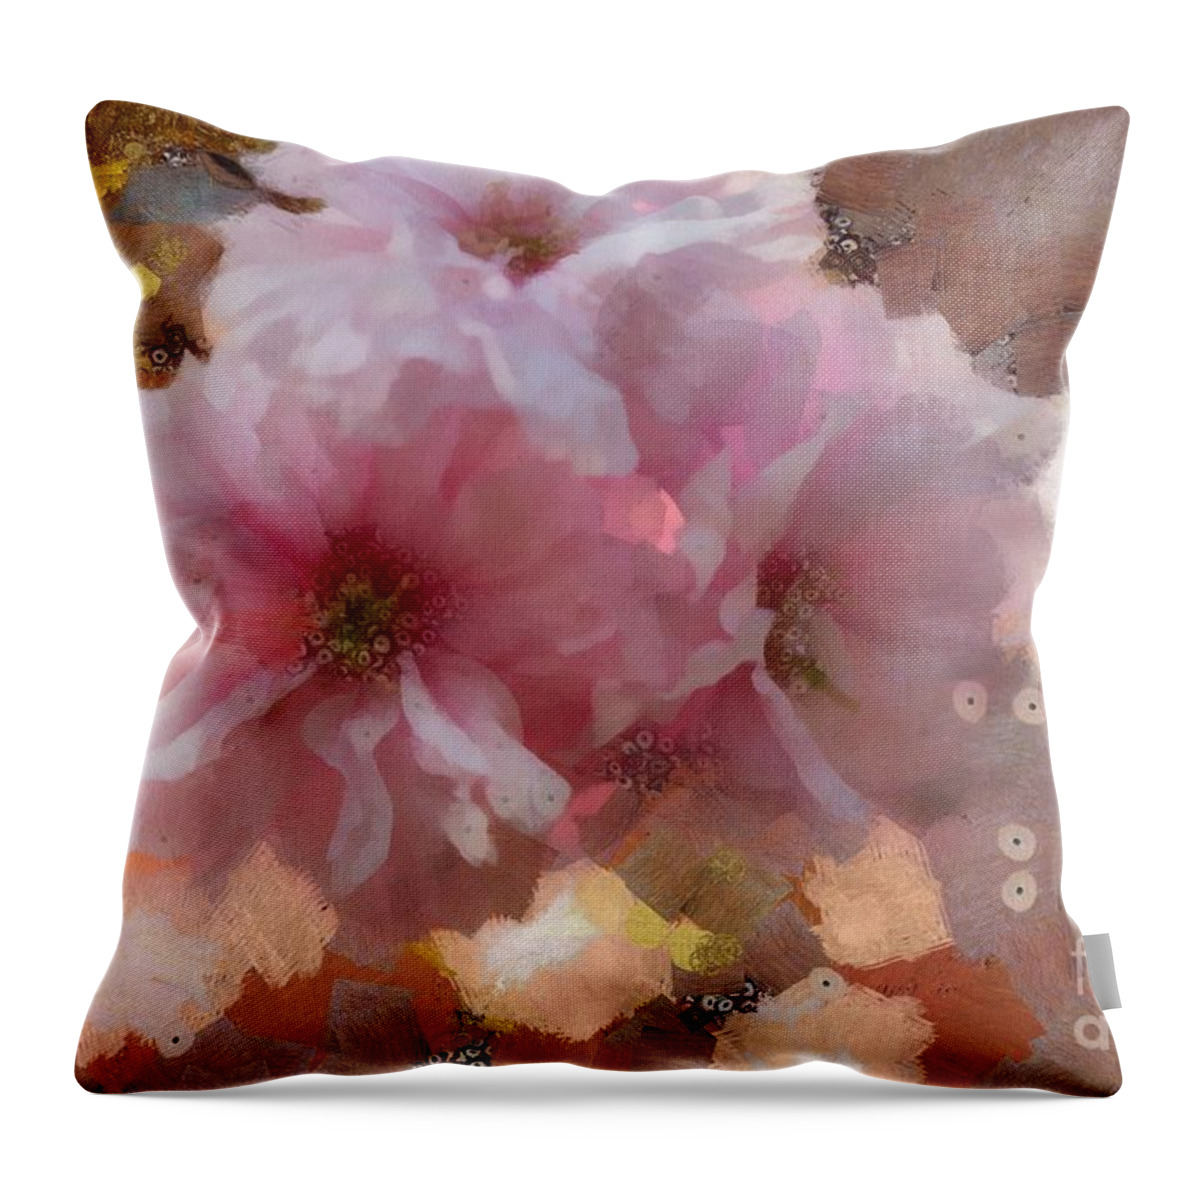 Cherry Blossom Throw Pillow featuring the digital art Cherry Blossom by Eva Lechner